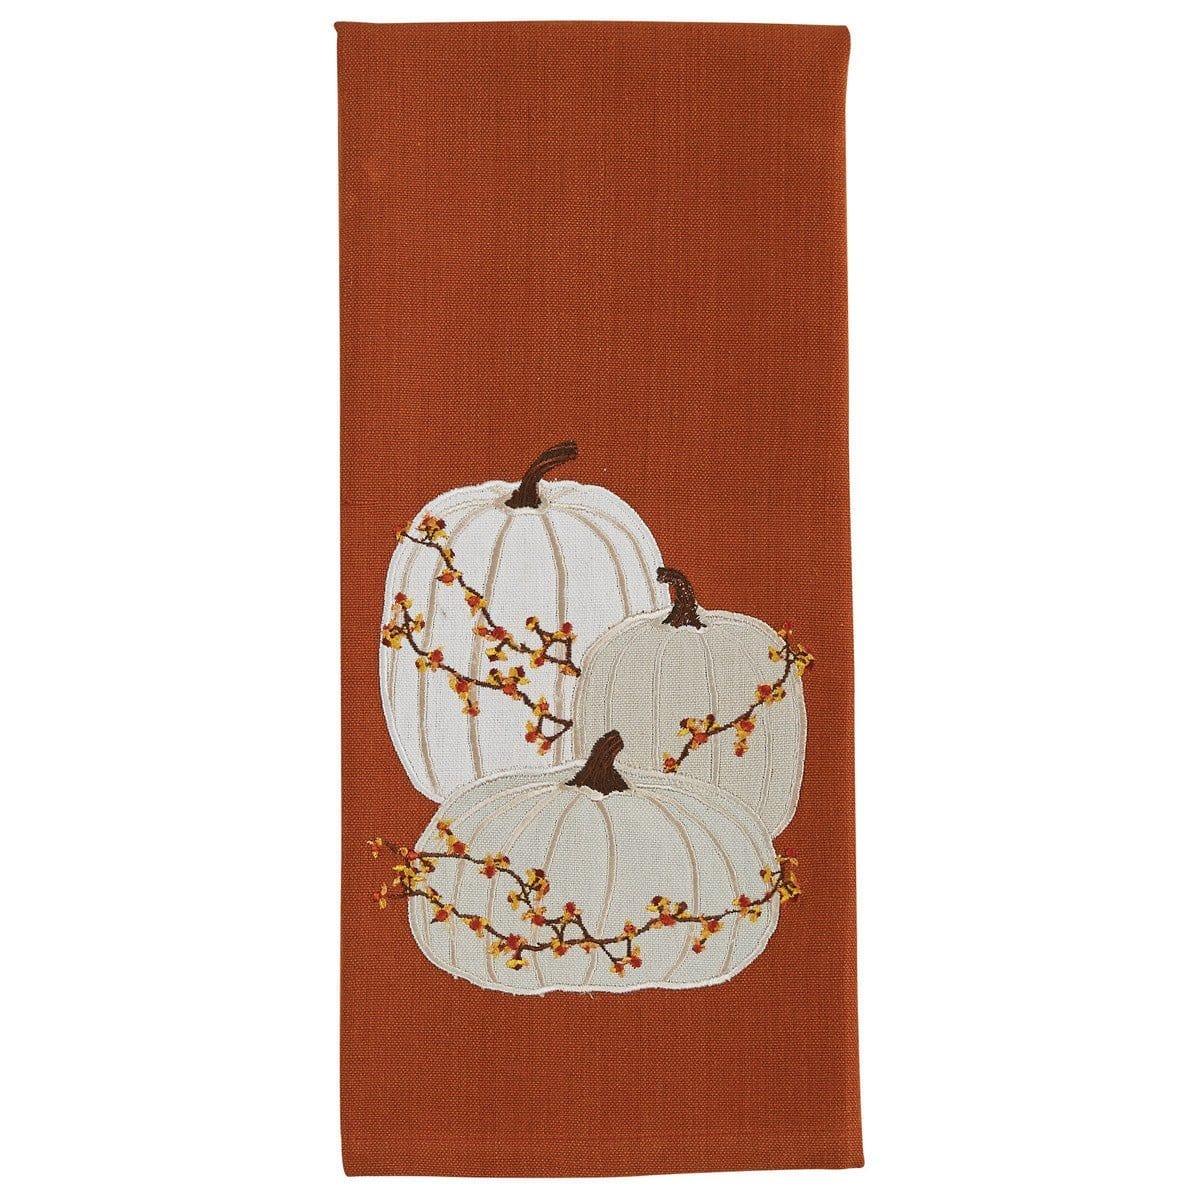 Appliqued & Embroidered Cream Pumpkins Decorative Towel-Park Designs-The Village Merchant